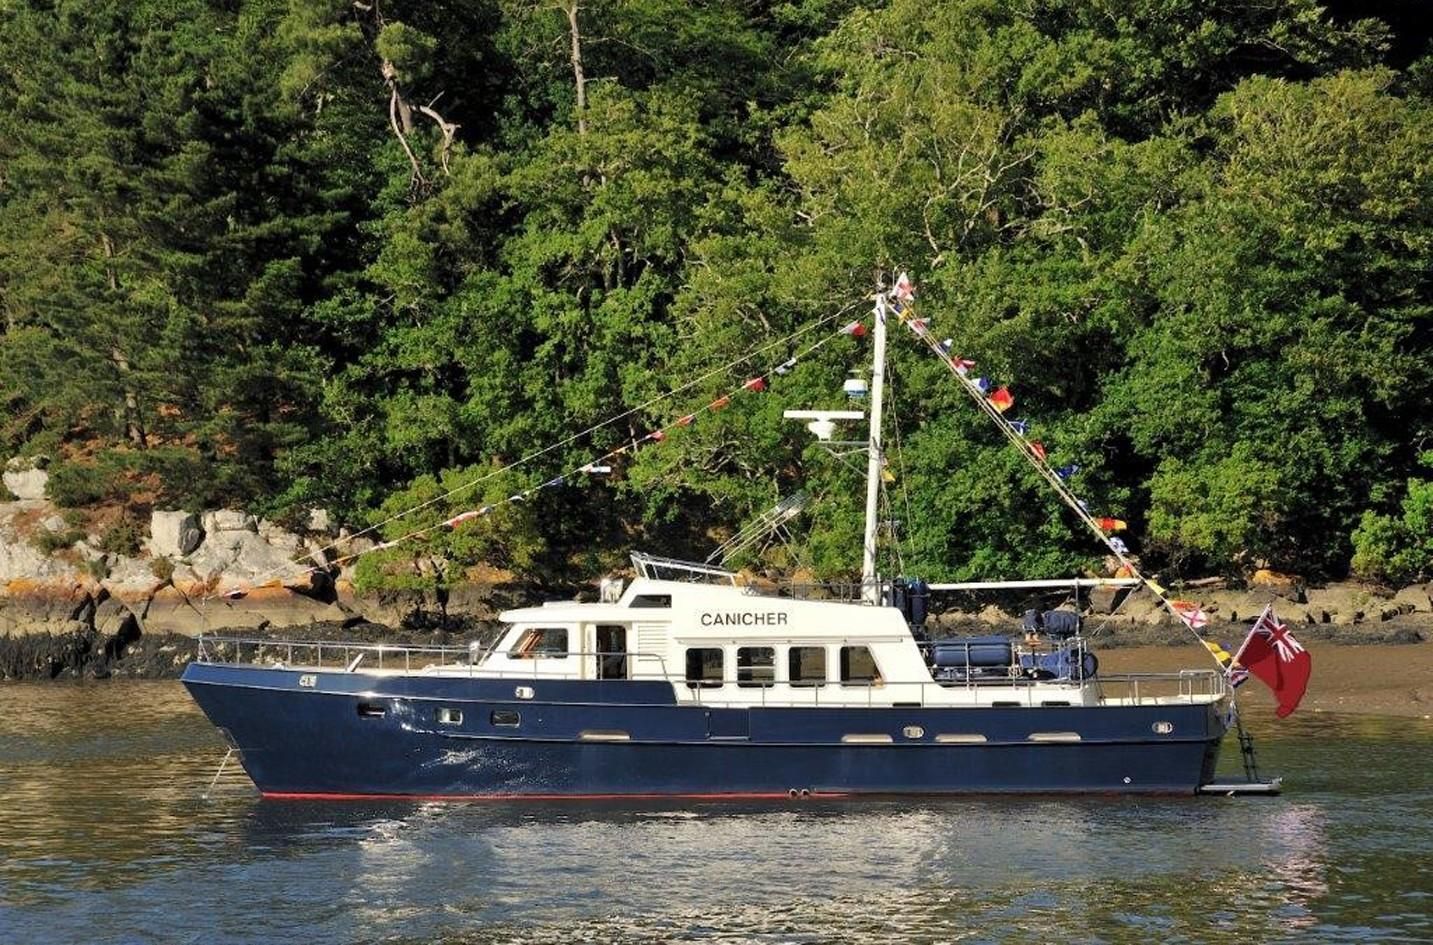 altena yacht for sale